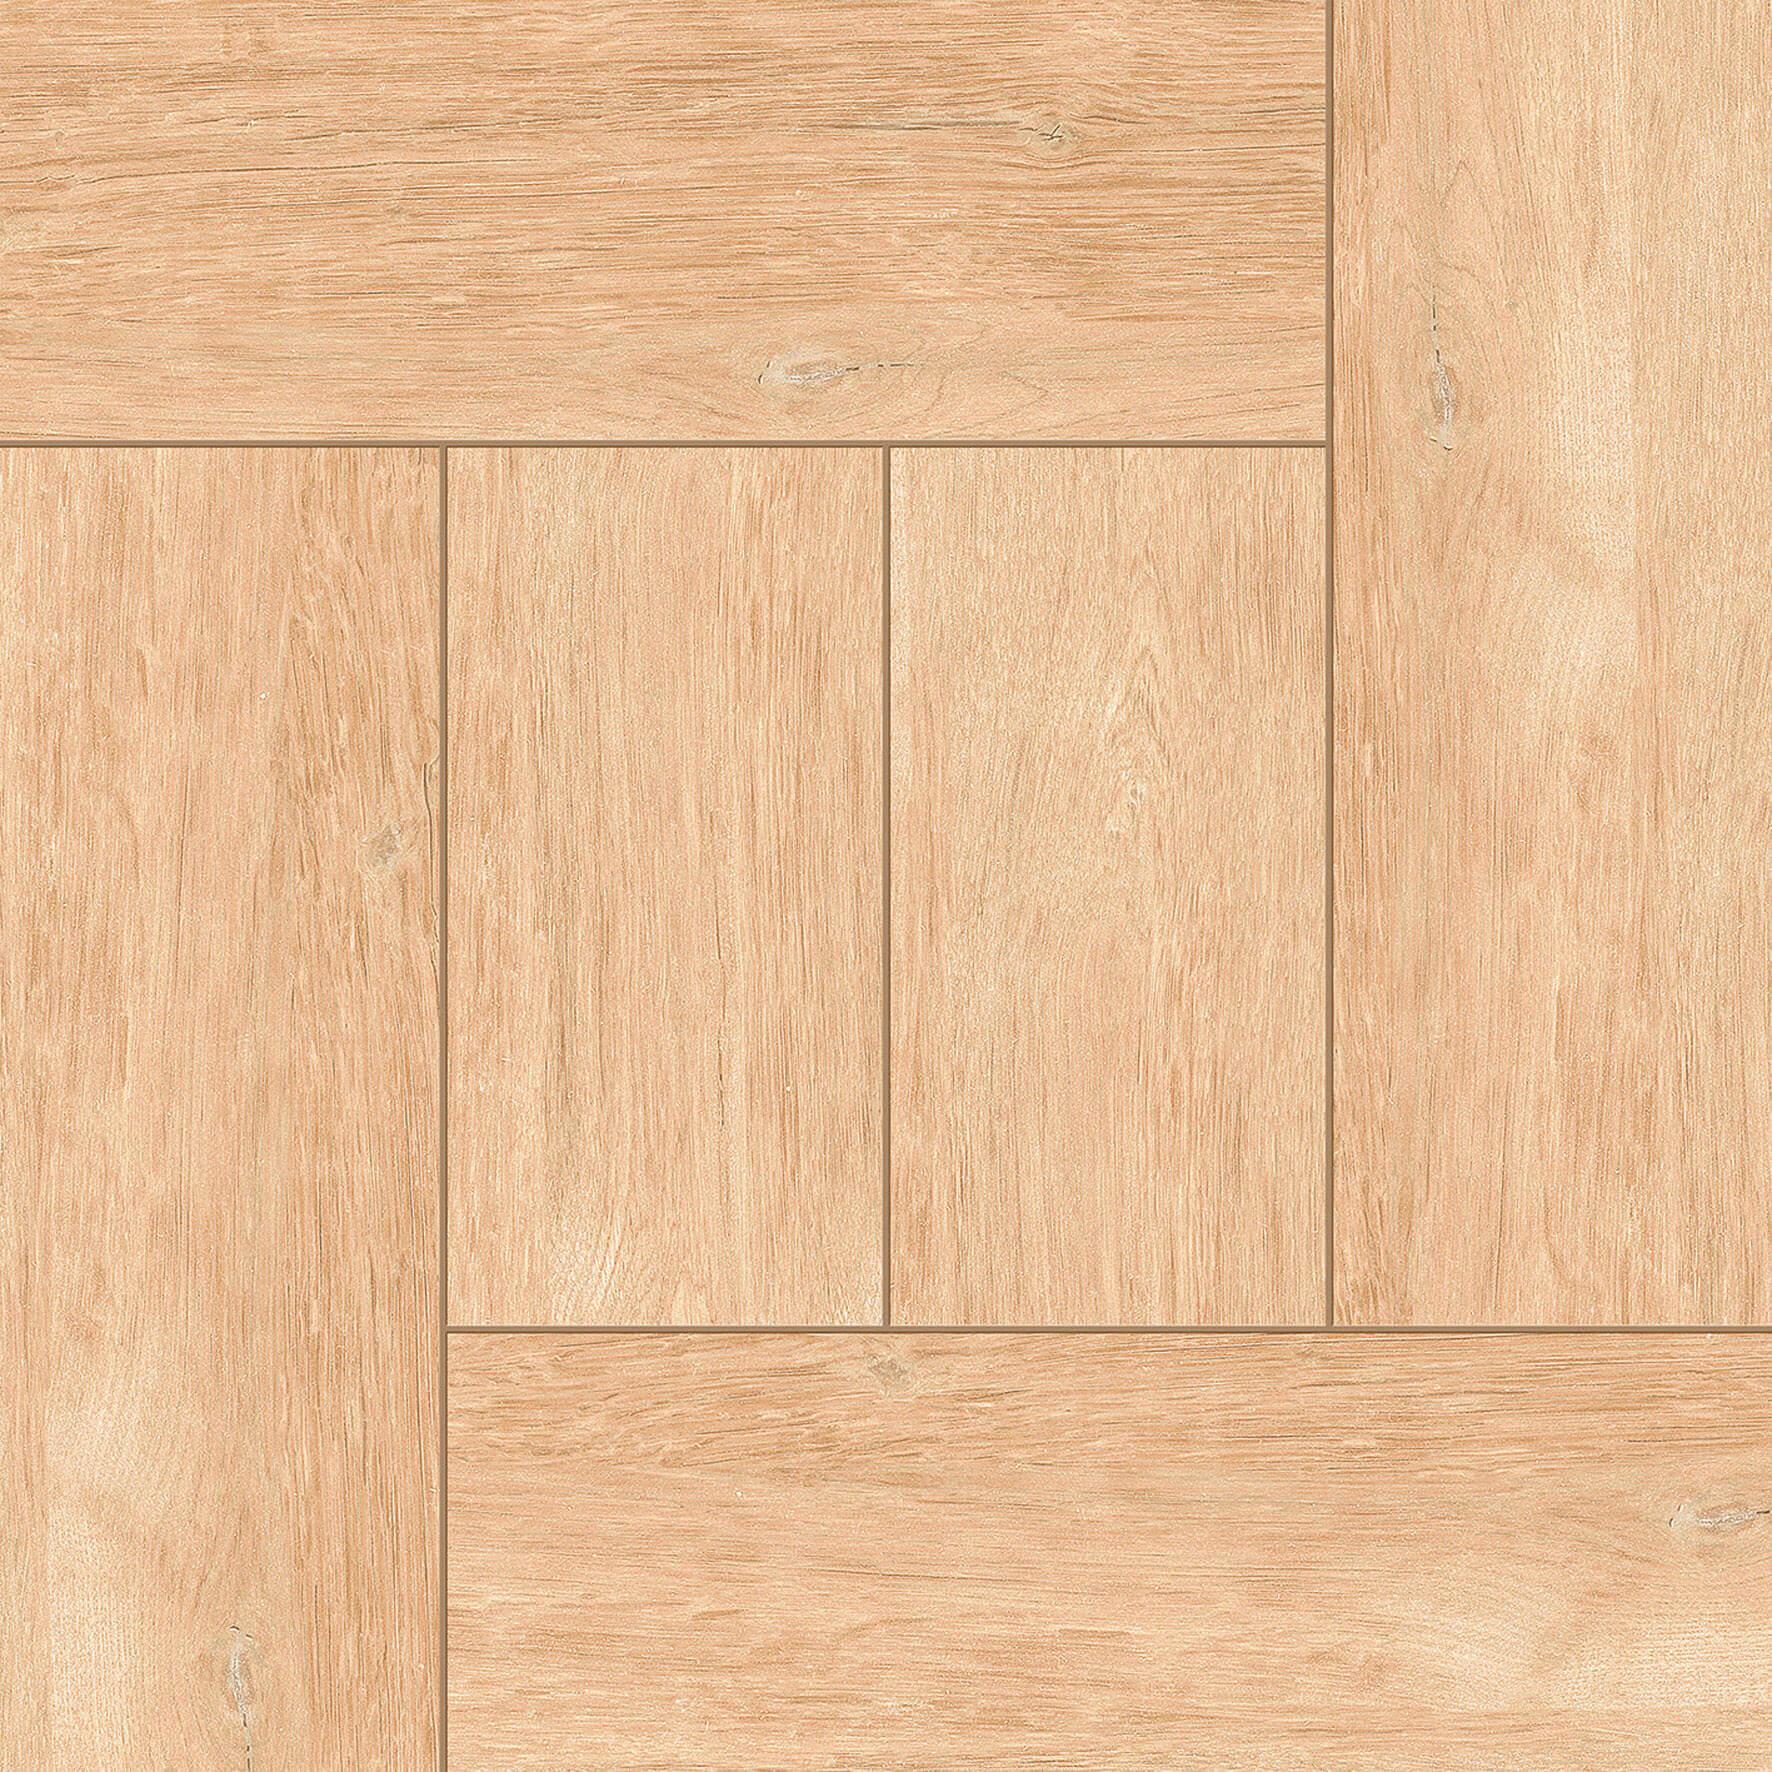 Wall Tiles for Living Room Tiles, Bedroom Tiles, Balcony Tiles, Accent Tiles, Terrace Tiles, Hospital Tiles, Automotive Tiles, High Traffic Tiles, Bar/Restaurant, Commercial/Office, Outdoor/Terrace